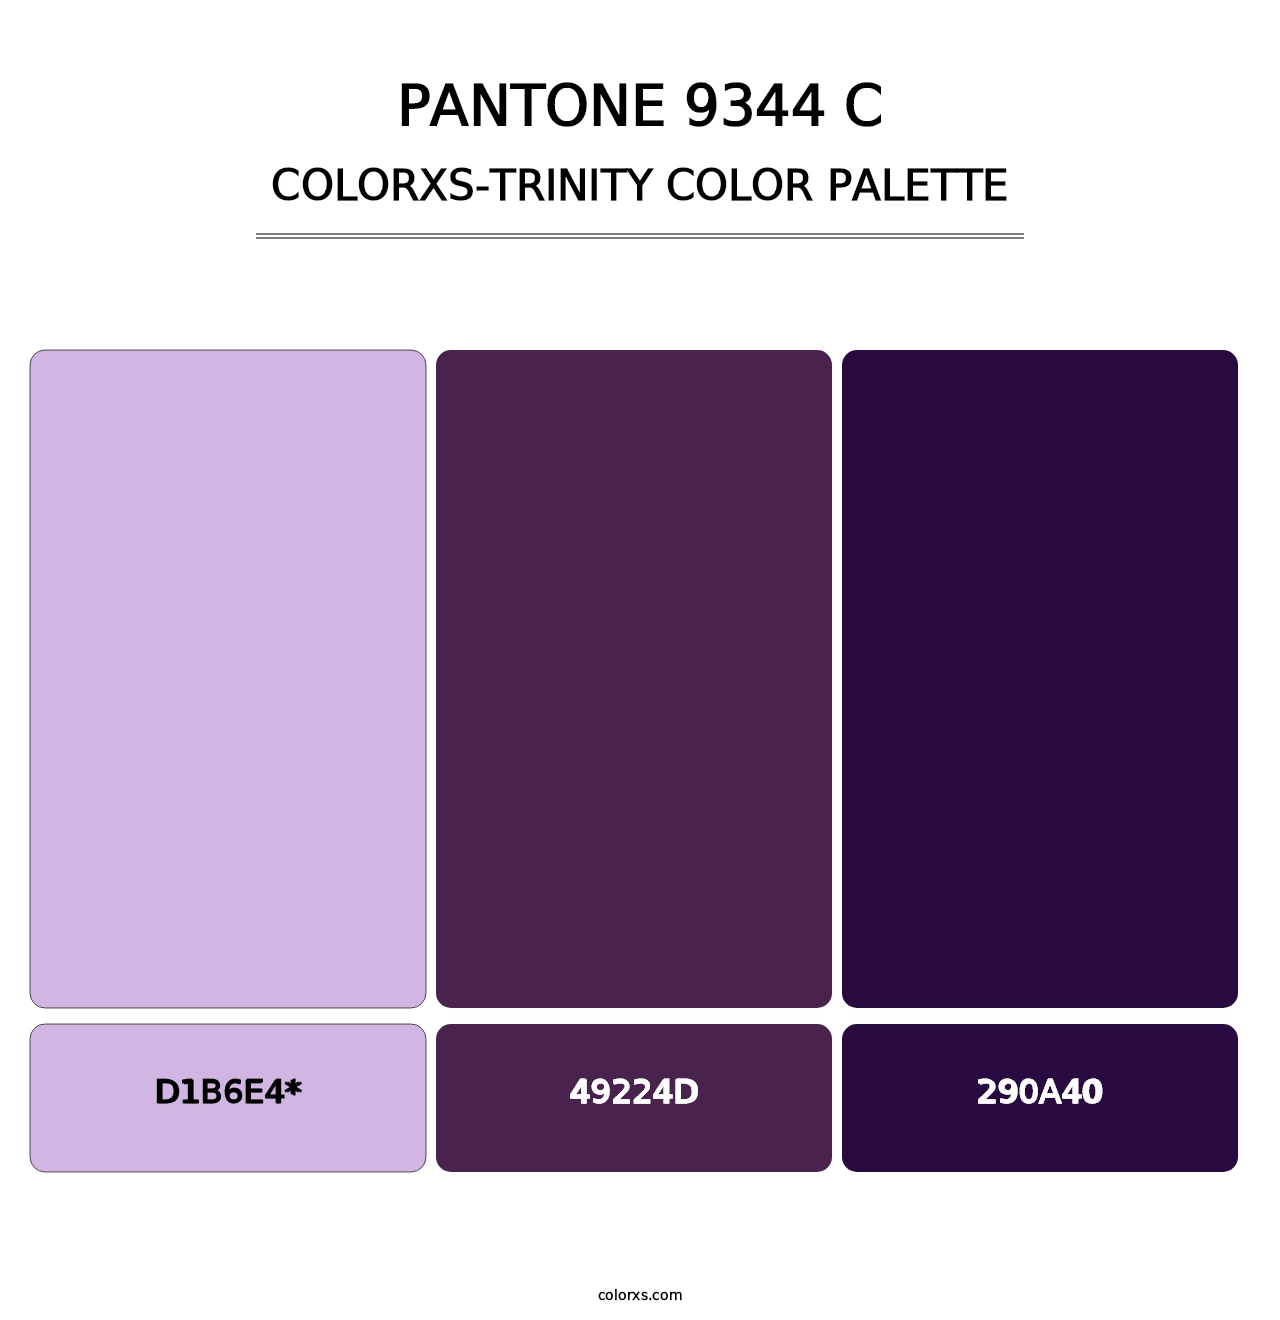 PANTONE 9344 C - Colorxs Trinity Palette